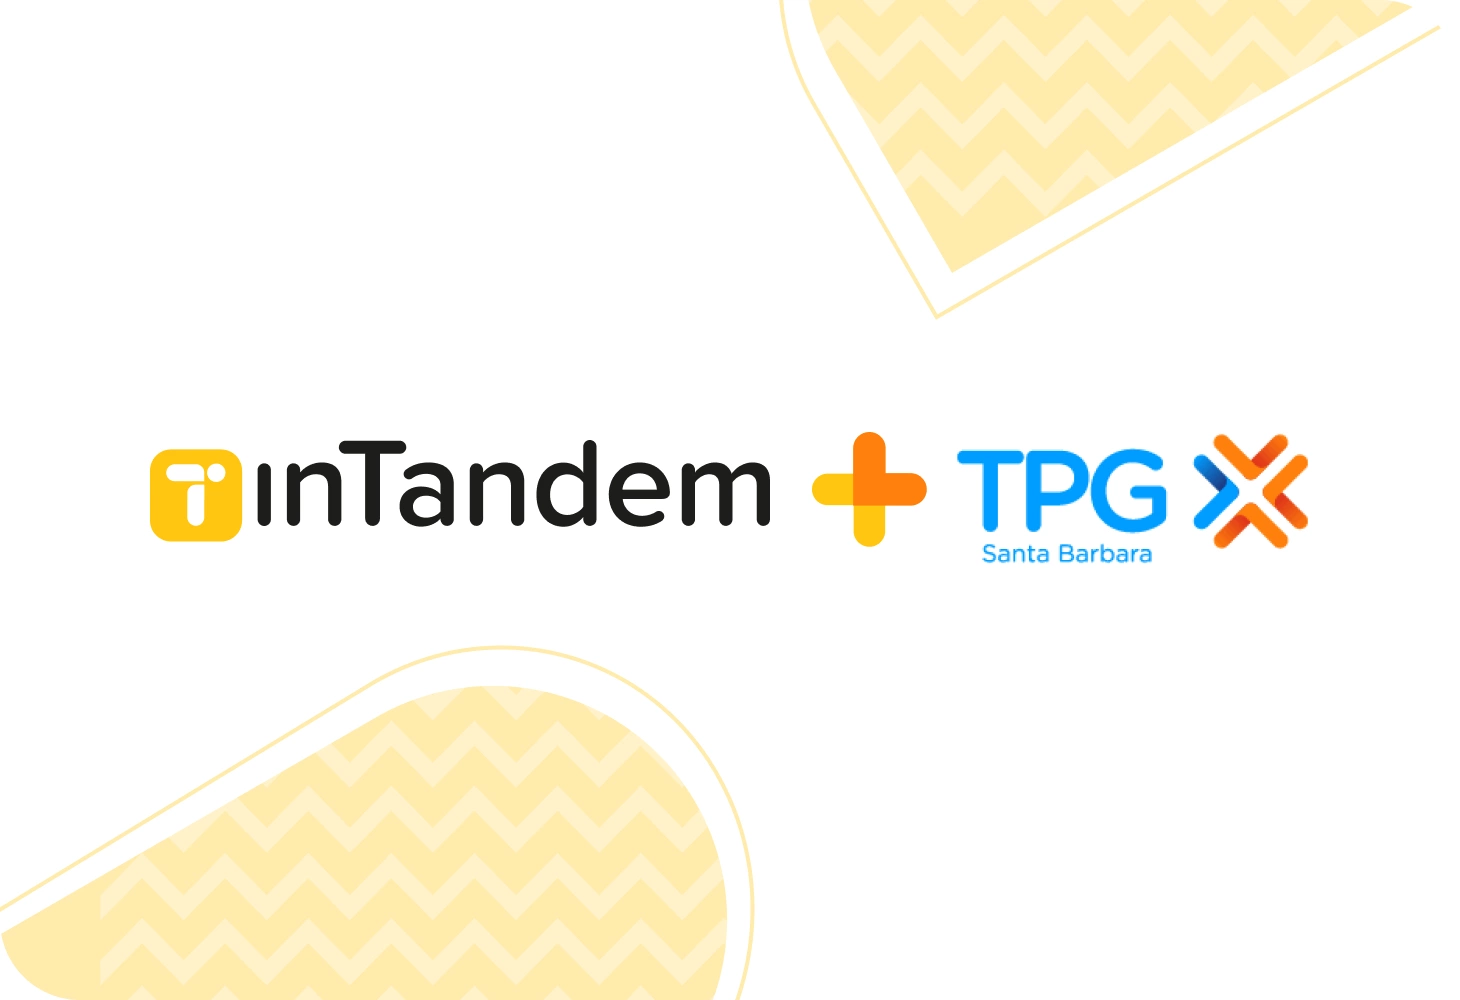 inTandem and TPG partnership